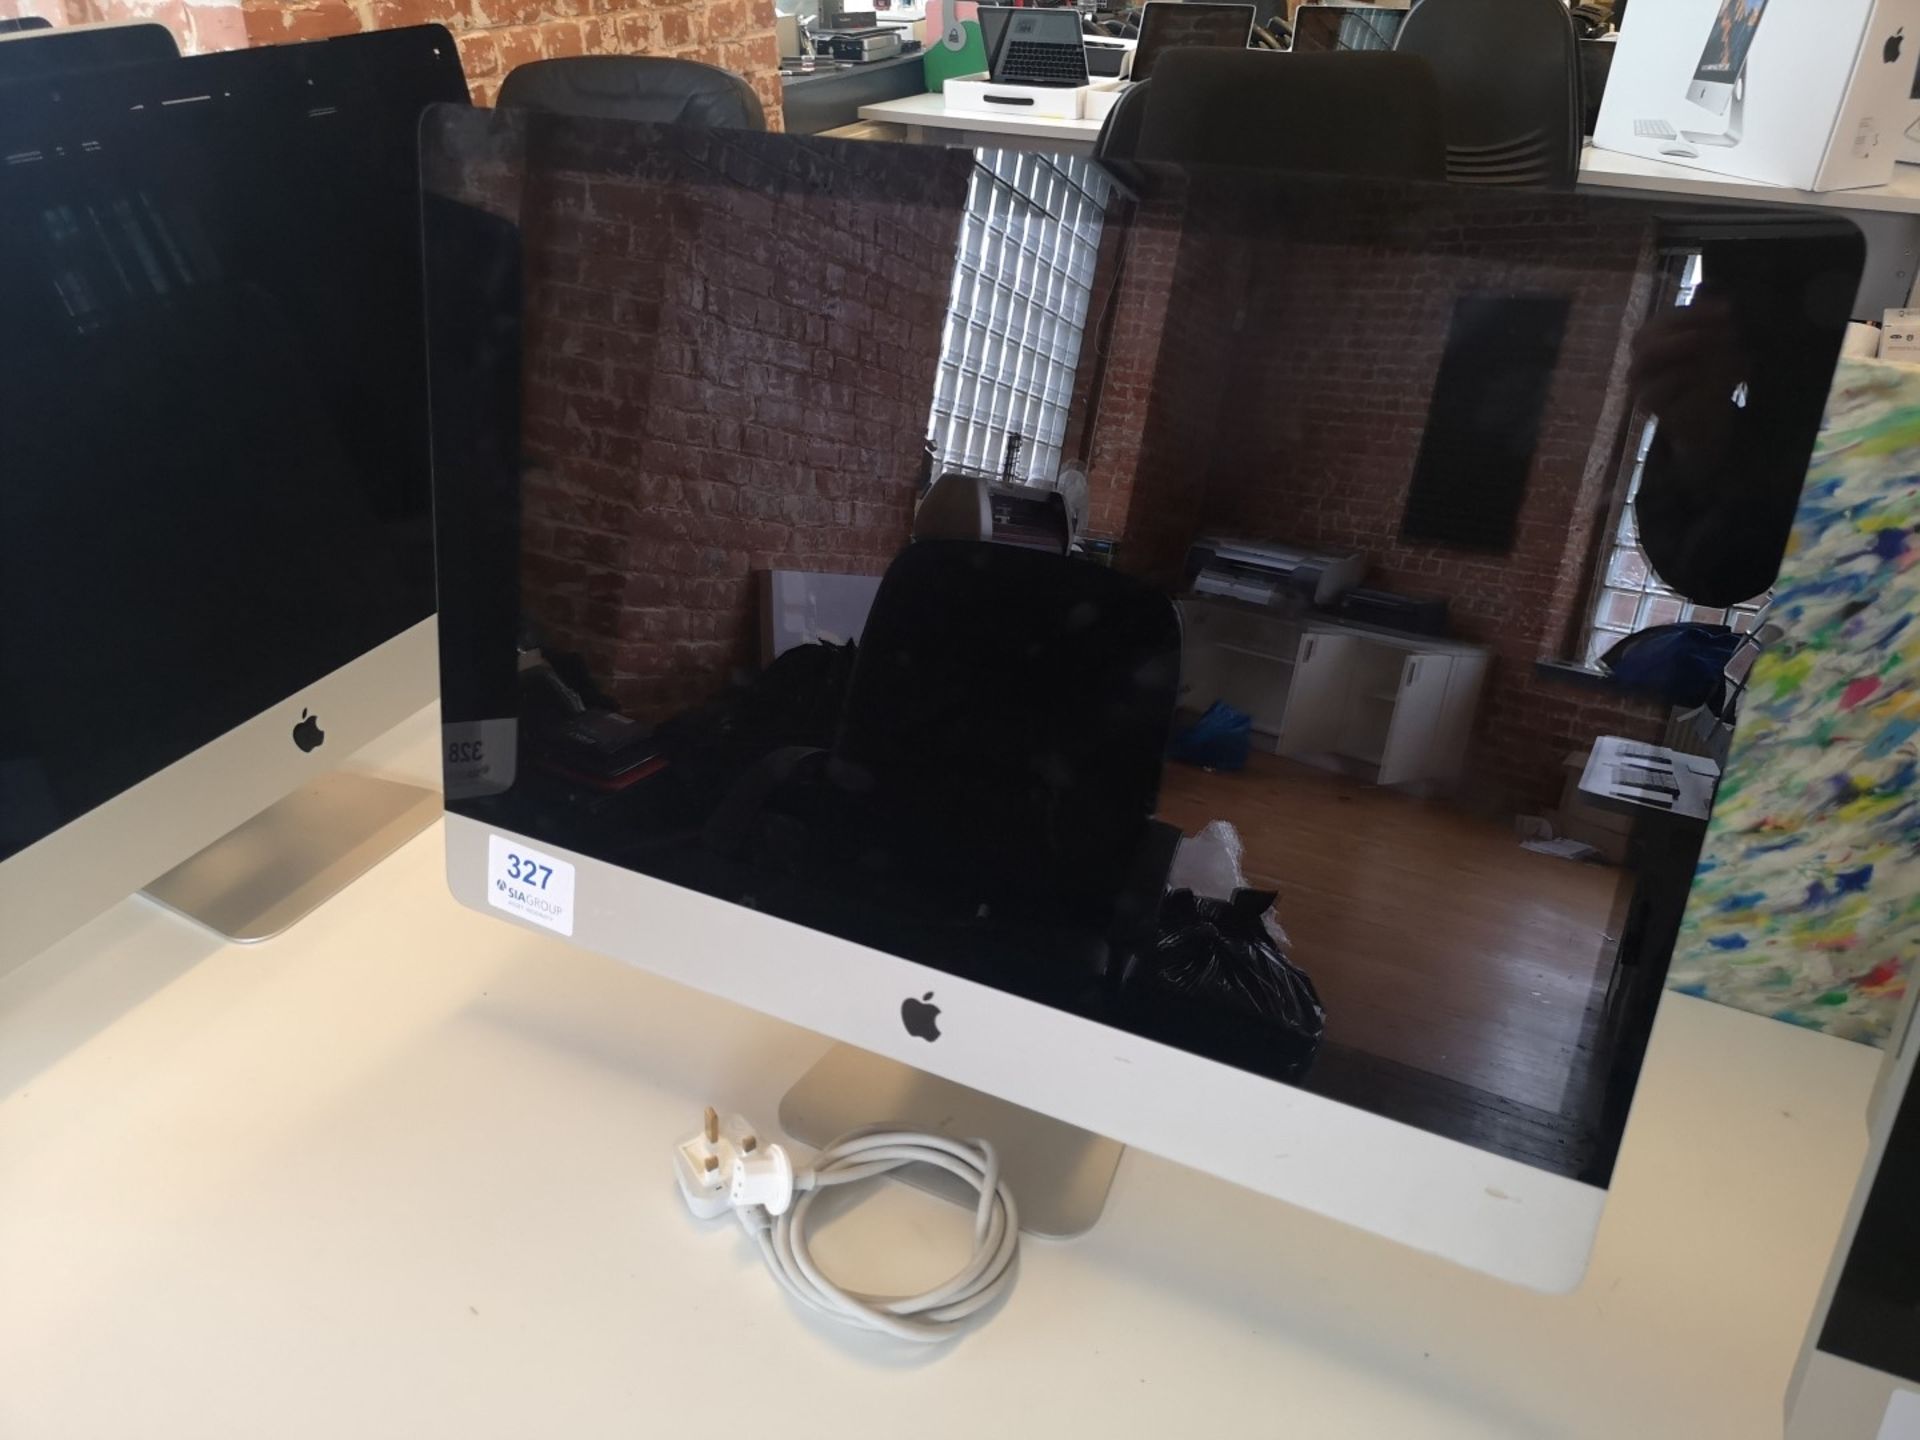 Apple iMac "Core i3" 3.2 27-Inch (Mid-2010) - Image 2 of 2